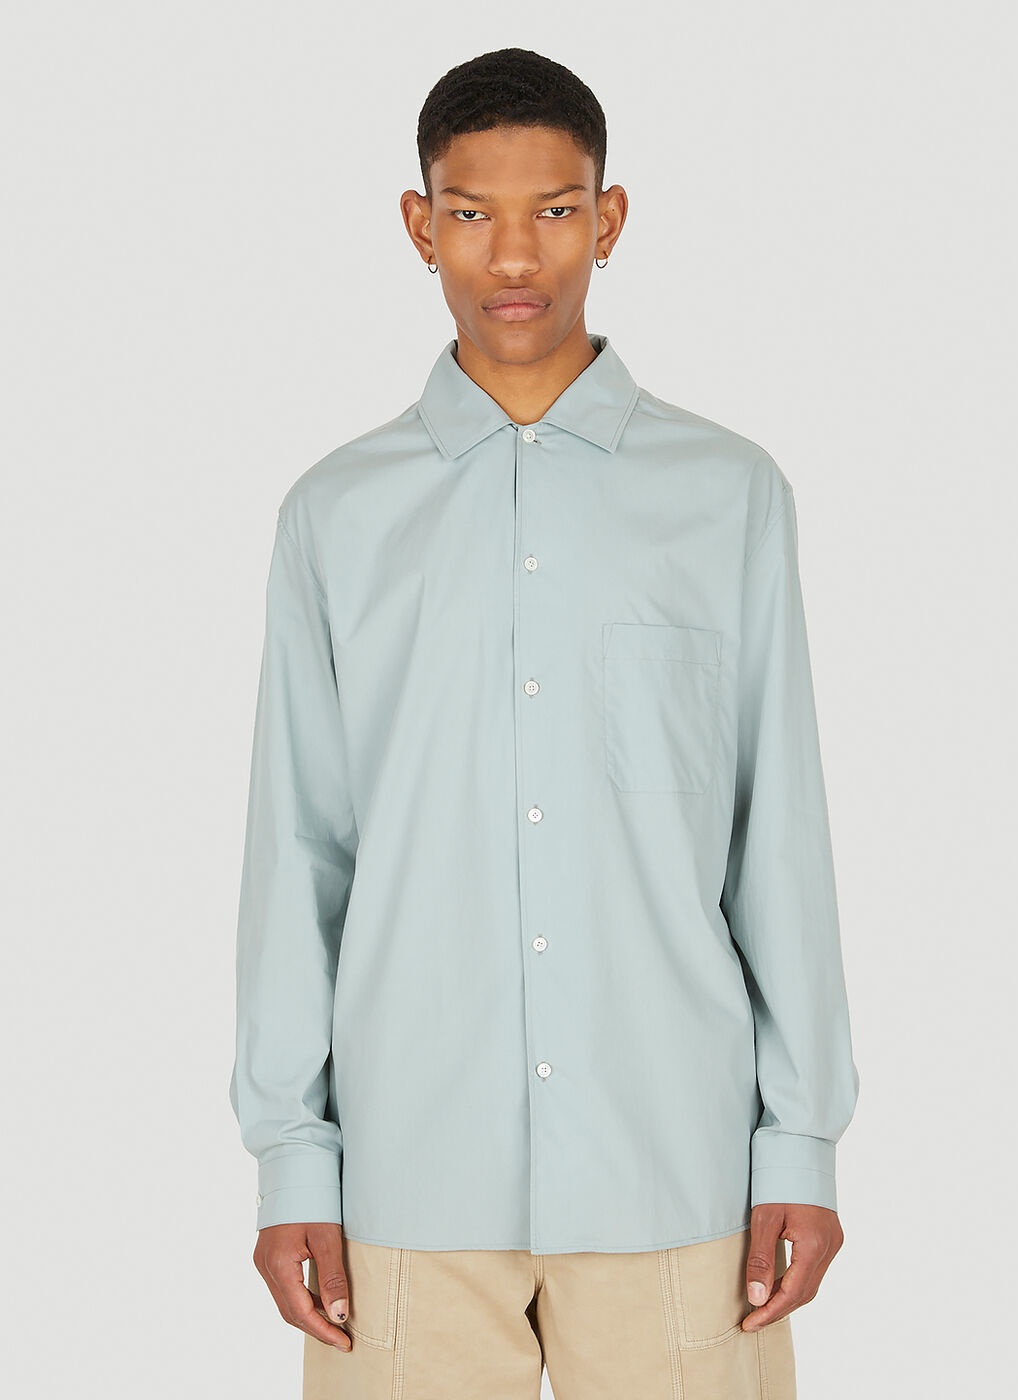 Convertible Collar Shirt in Light Blue Lemaire